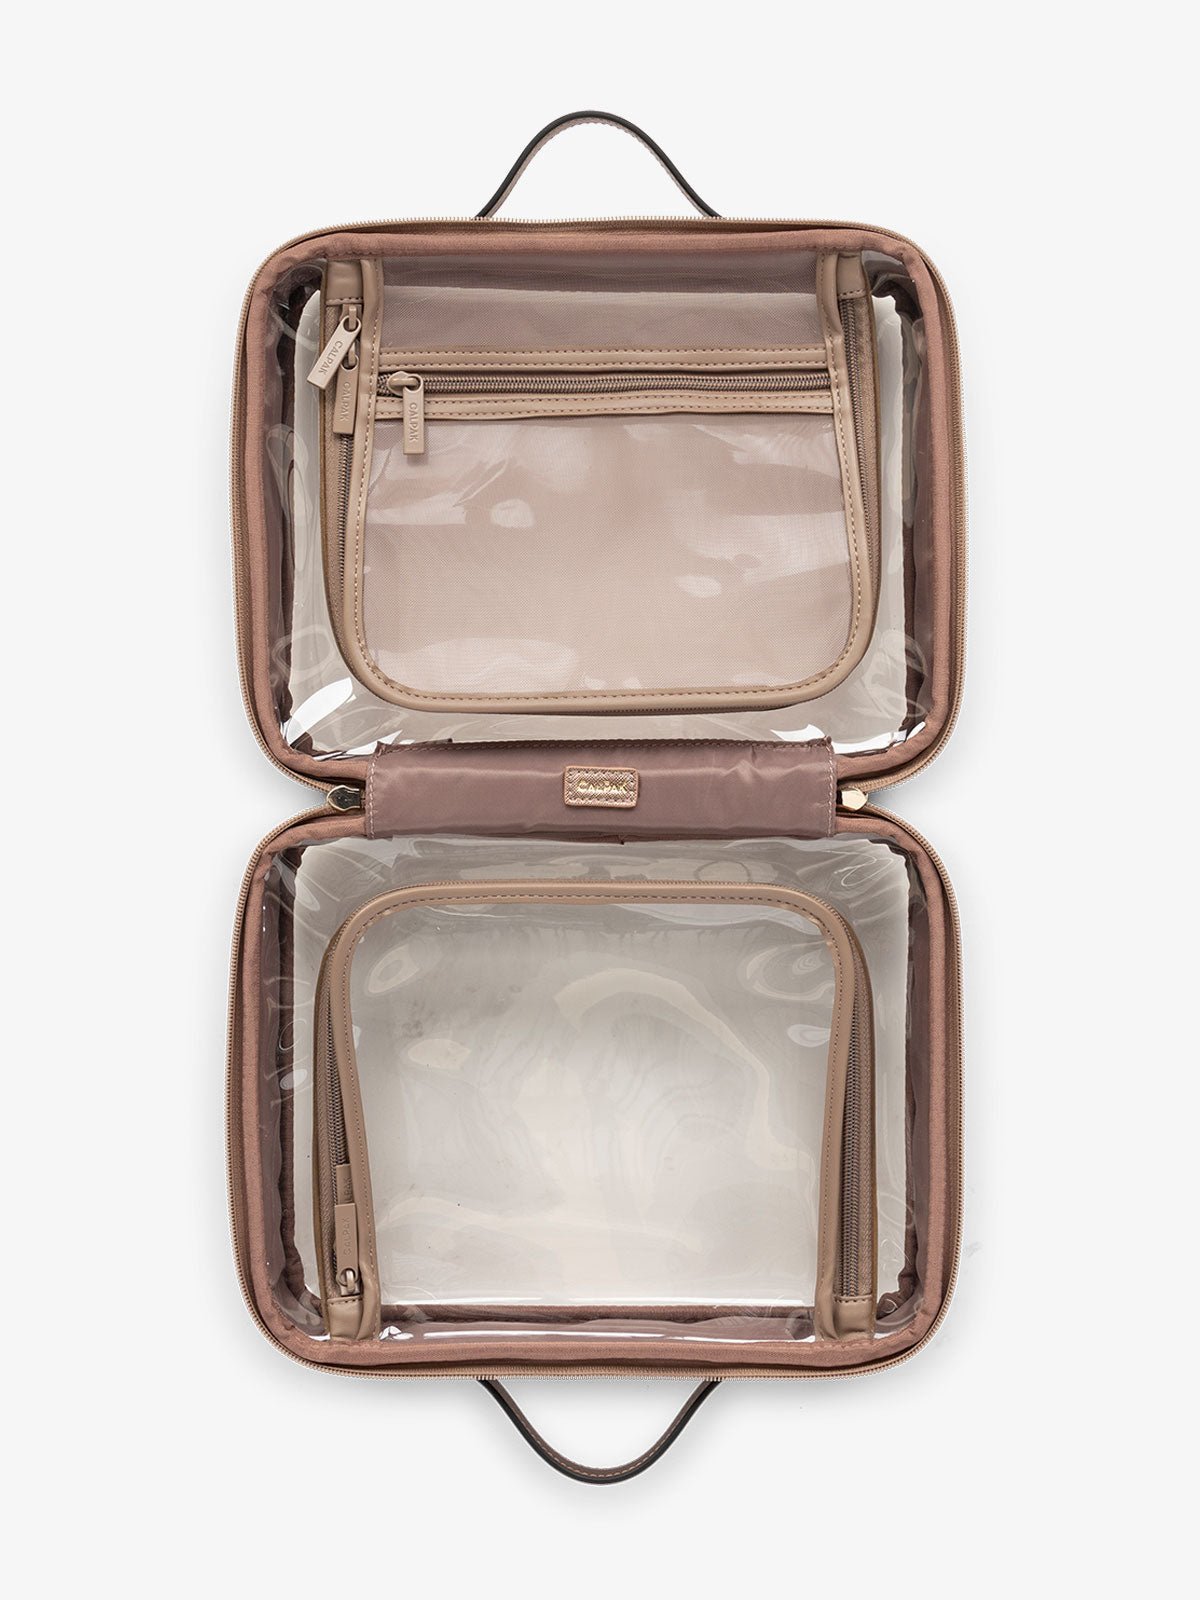 CALPAK large transparent water resistant travel makeup bag with compartments in metallic brown bronze